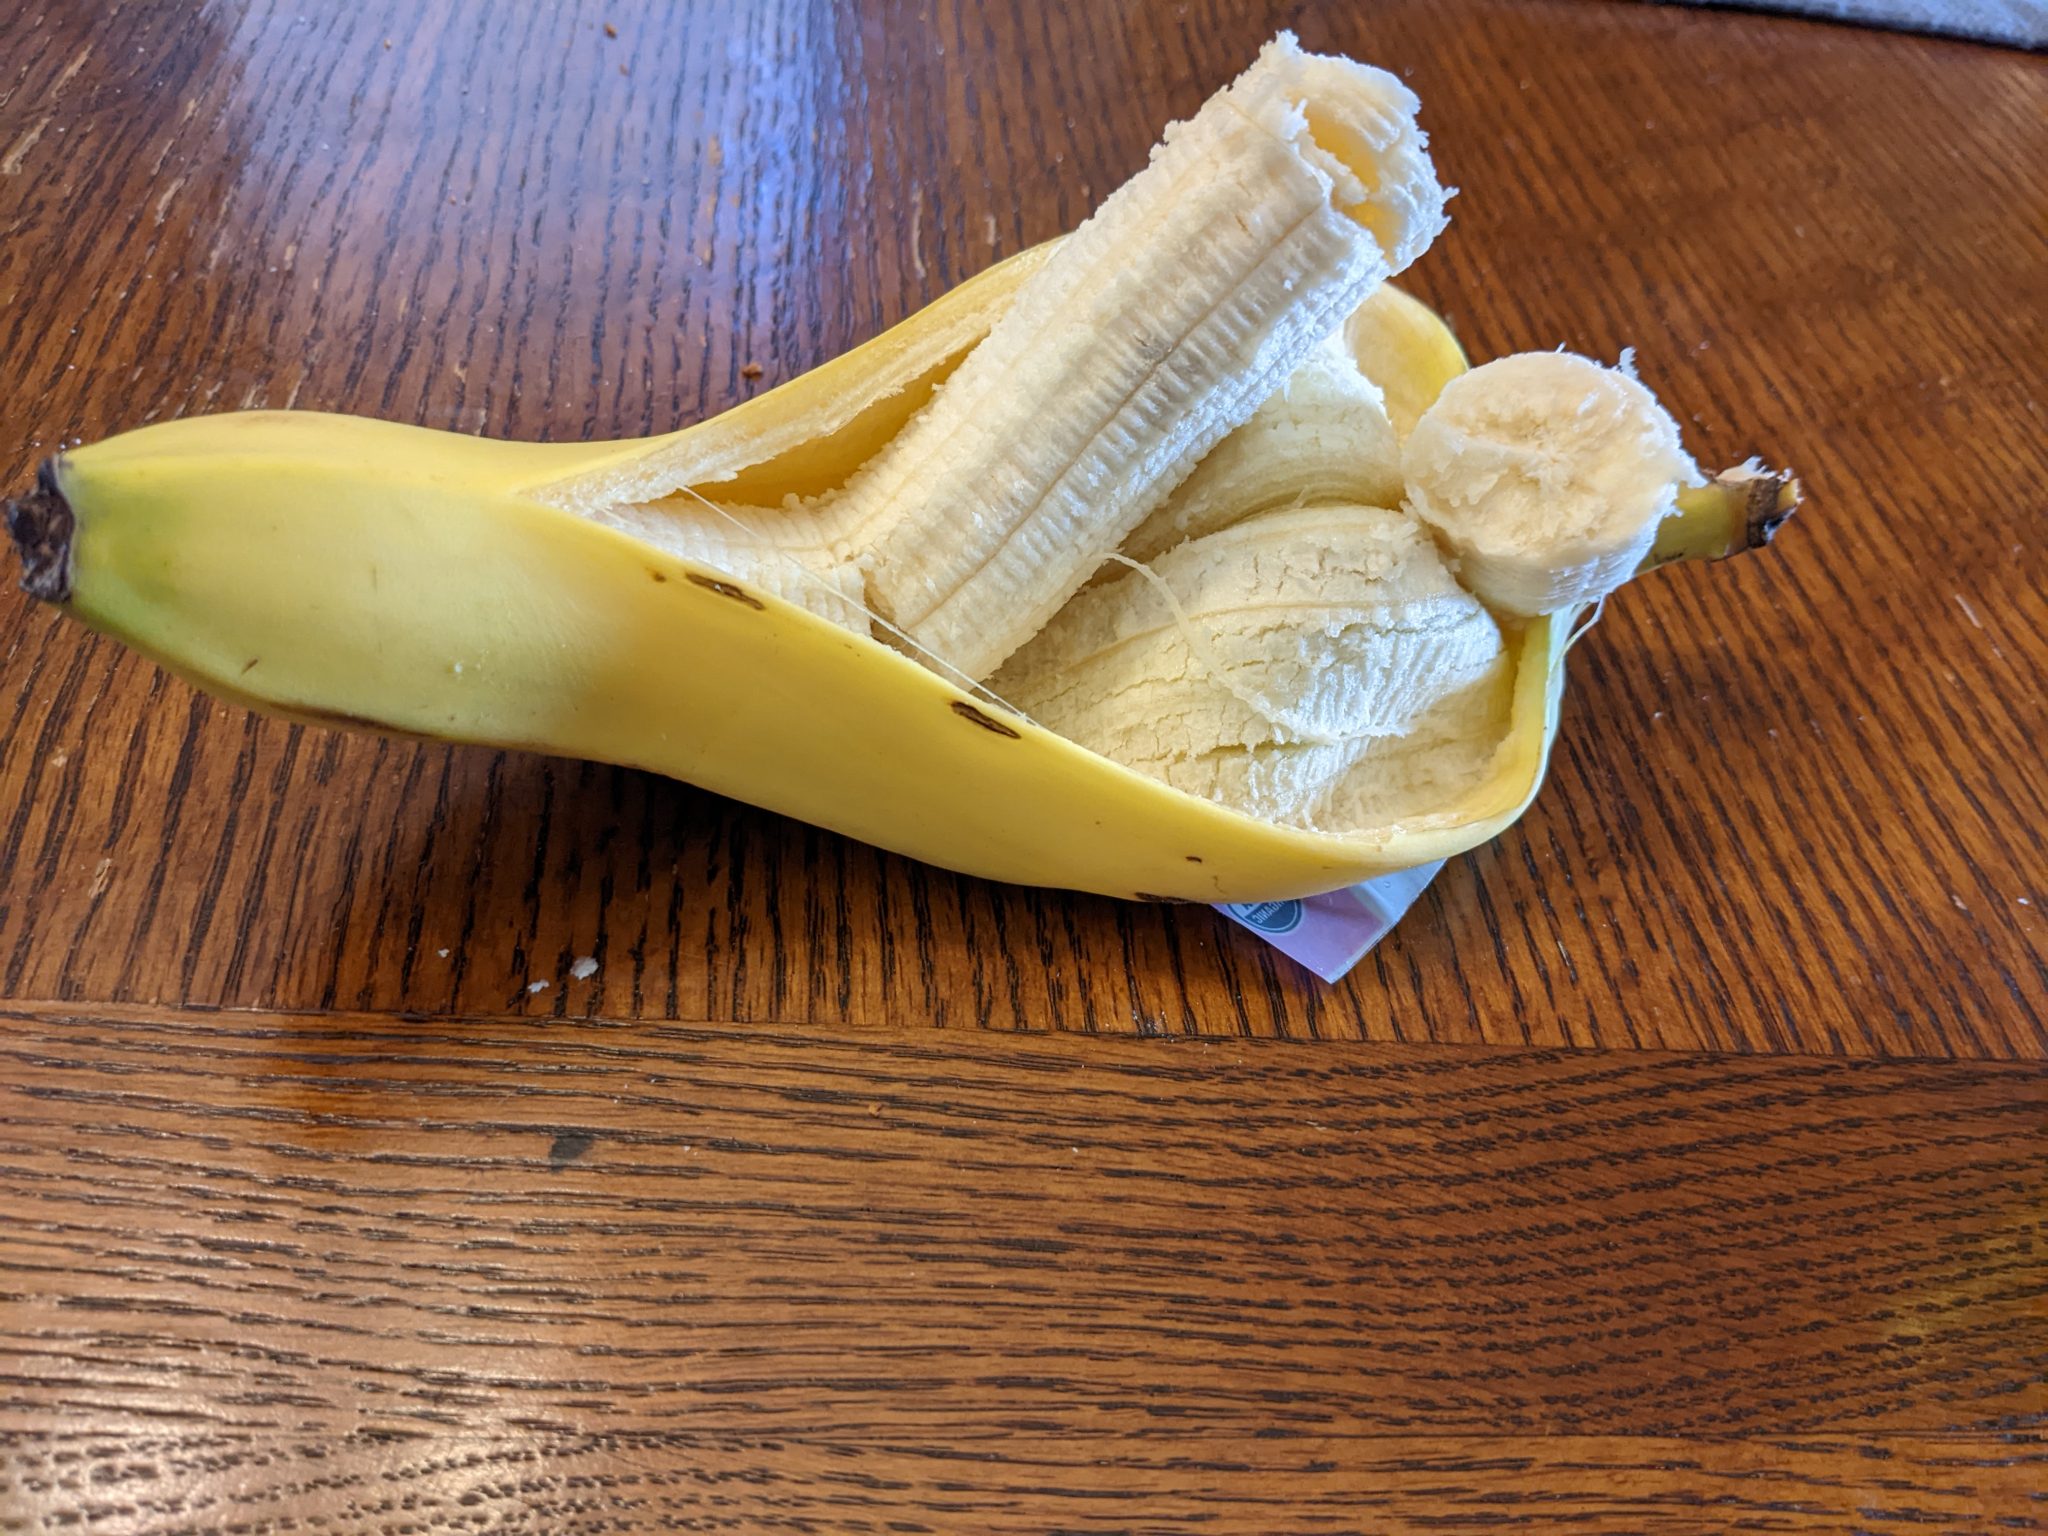 An open banana on a table